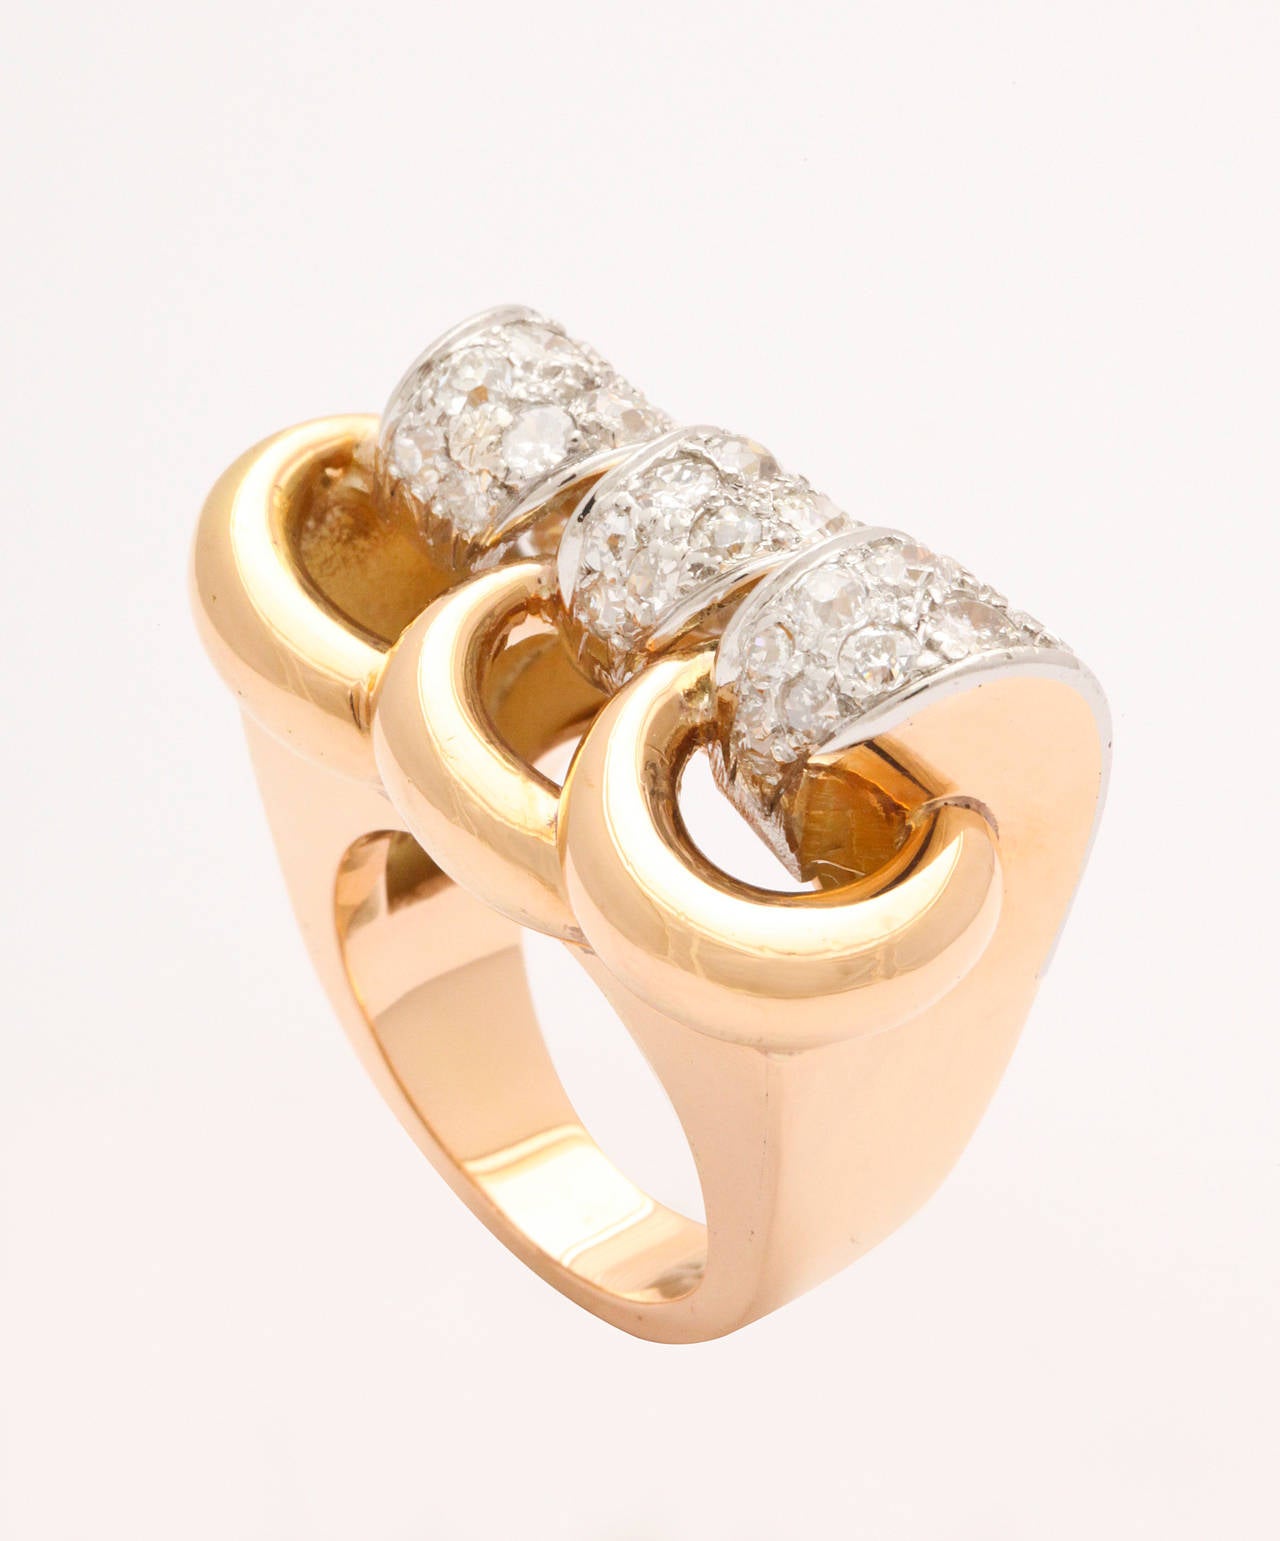 gold ring design for female with price in saudi arabia